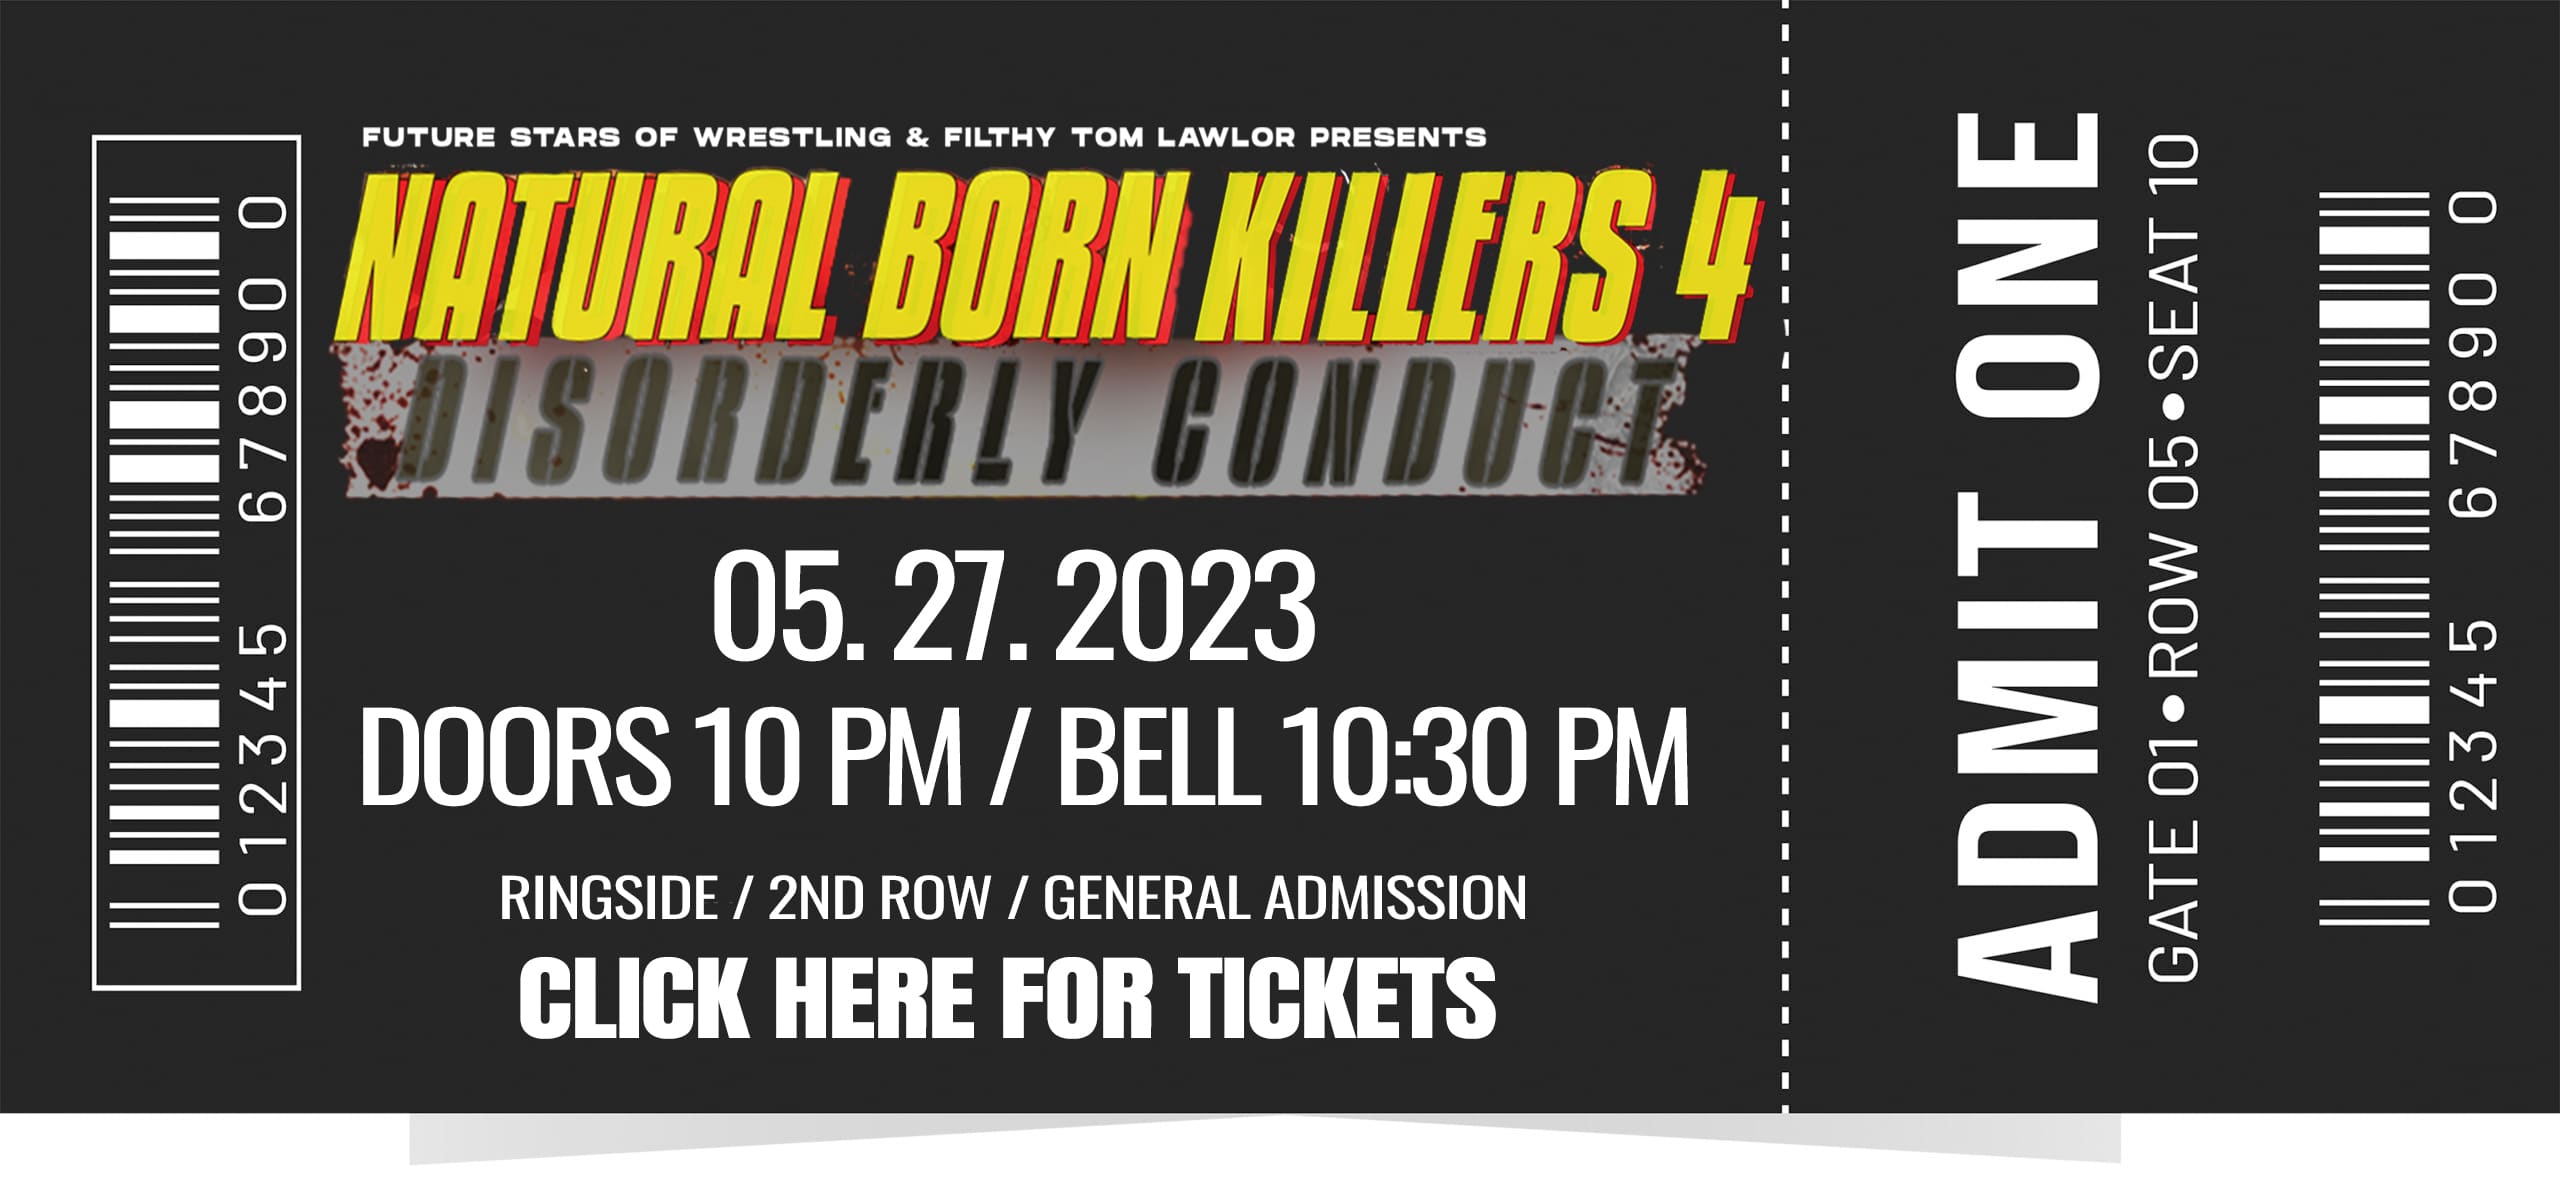 FSW Filthy Tom Lawlor Natural Born Killers 4 May 27 2023 Las Vegas NV